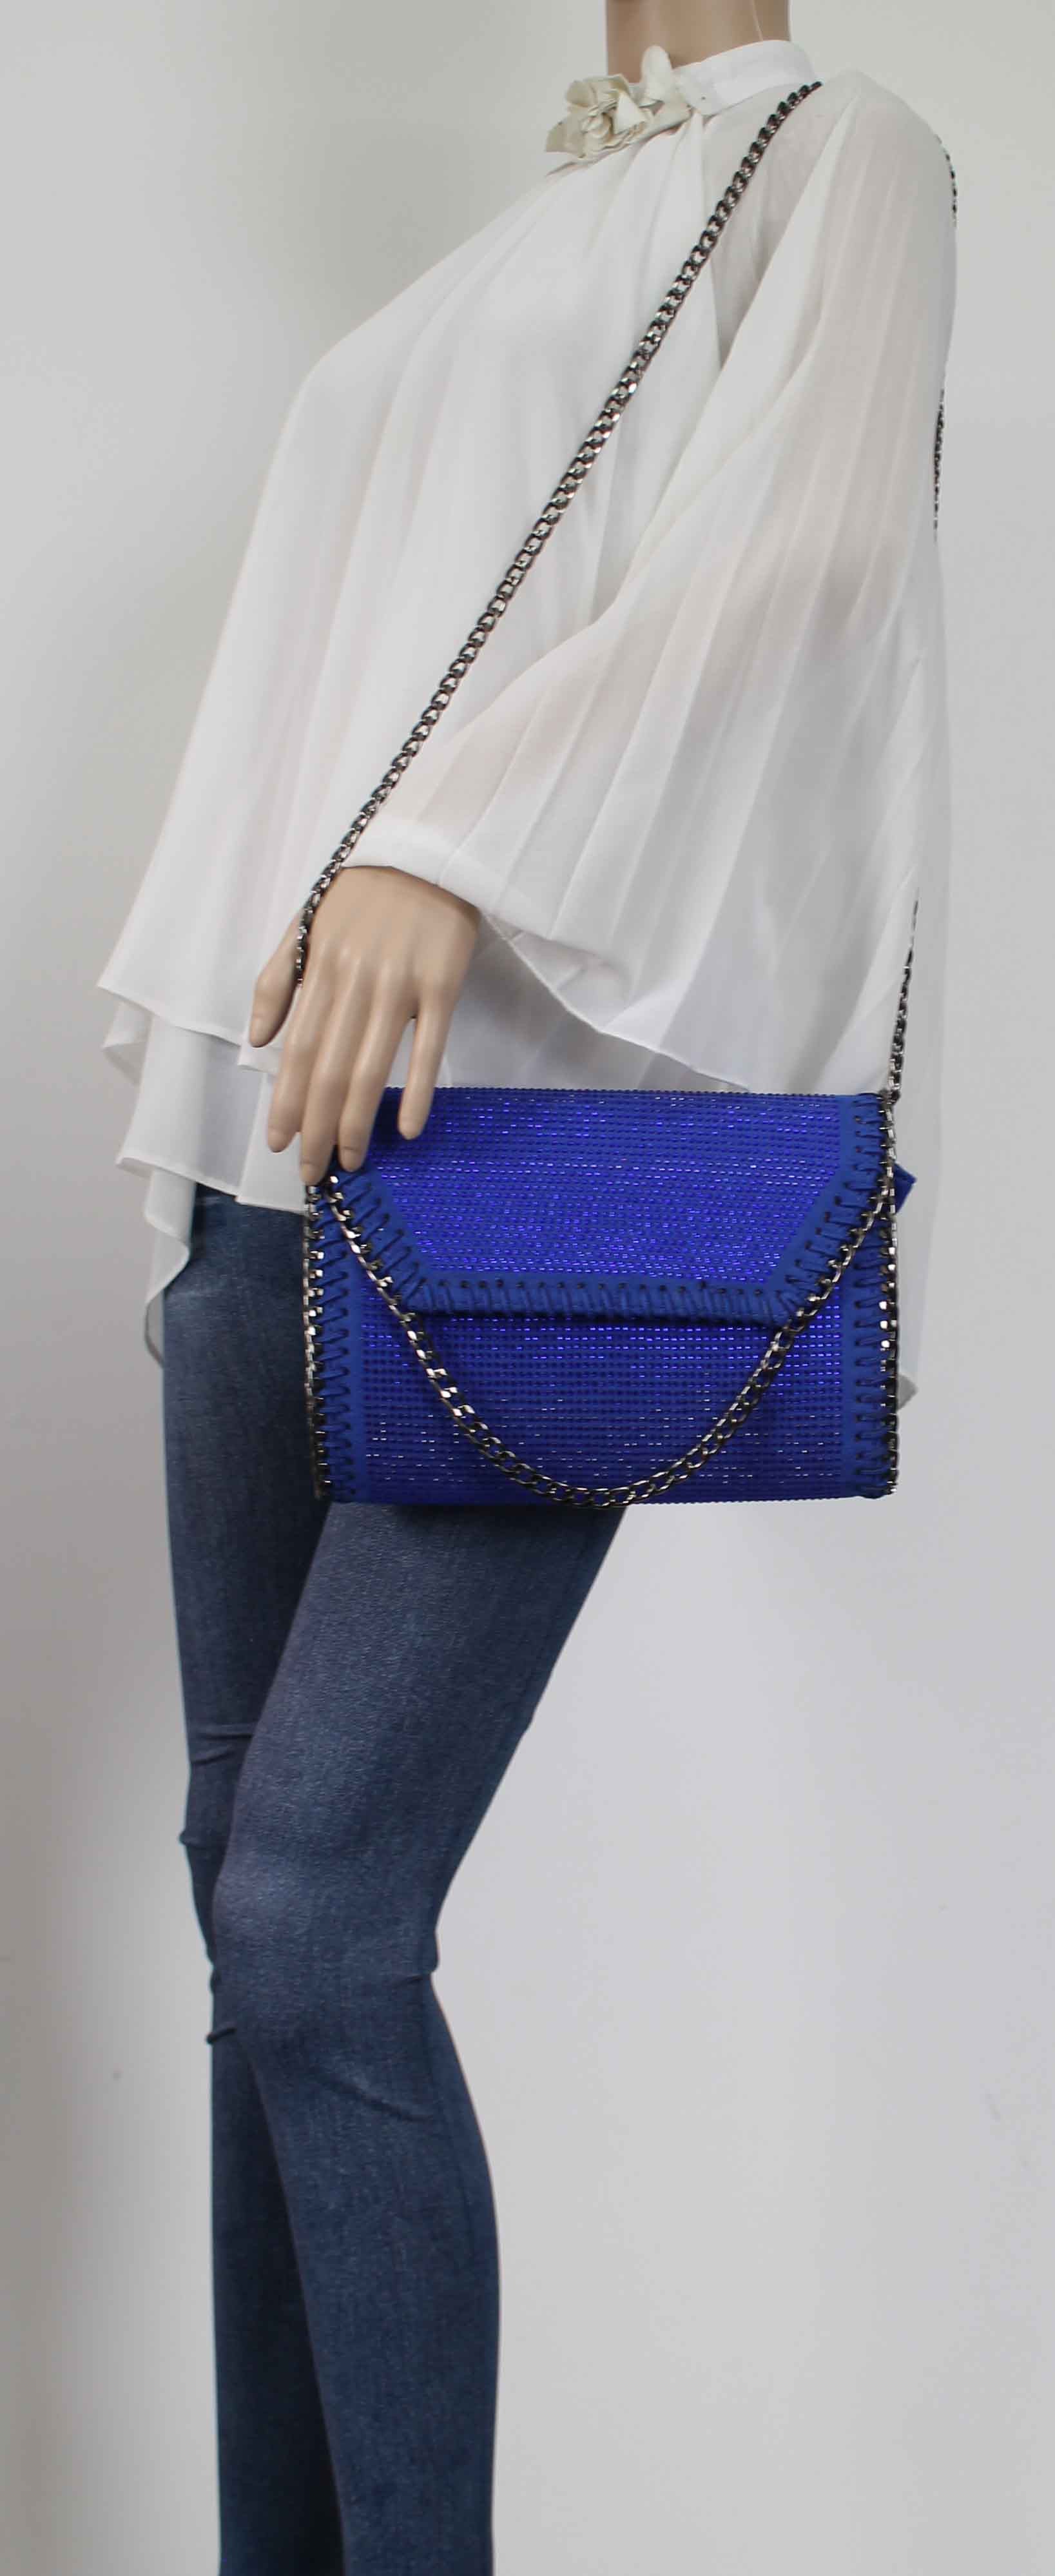 SWANKYSWANS Soi Diamante Clutch Bag Royal Blue Cute Cheap Clutch Bag For Weddings School and Work